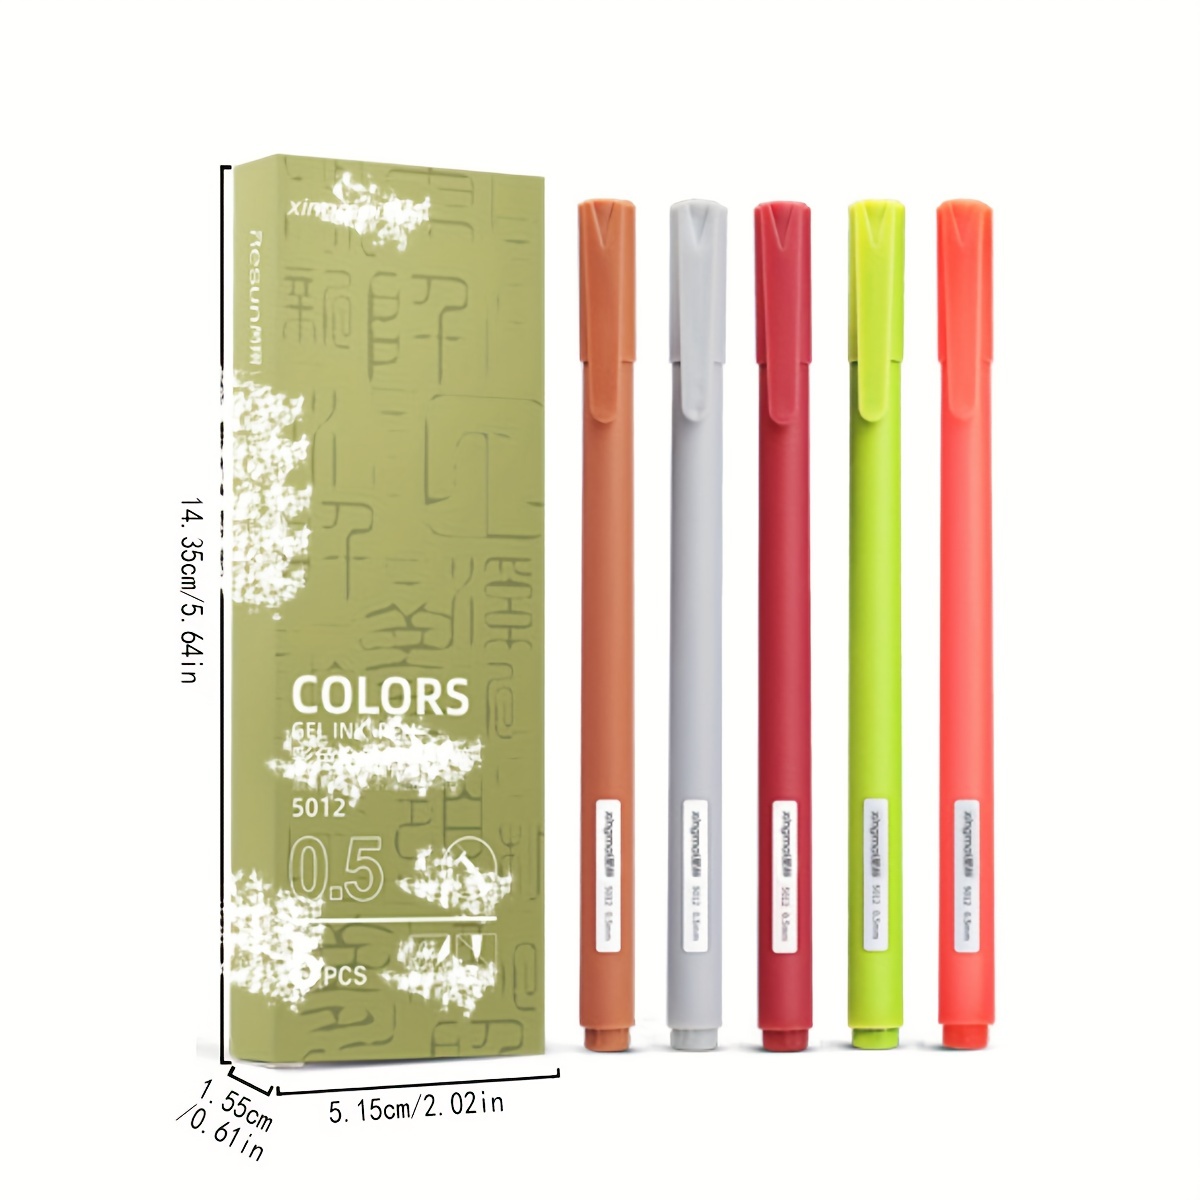 Xingmai Color Gel Pen Morandi Macaron Water Pen Set Note - Temu